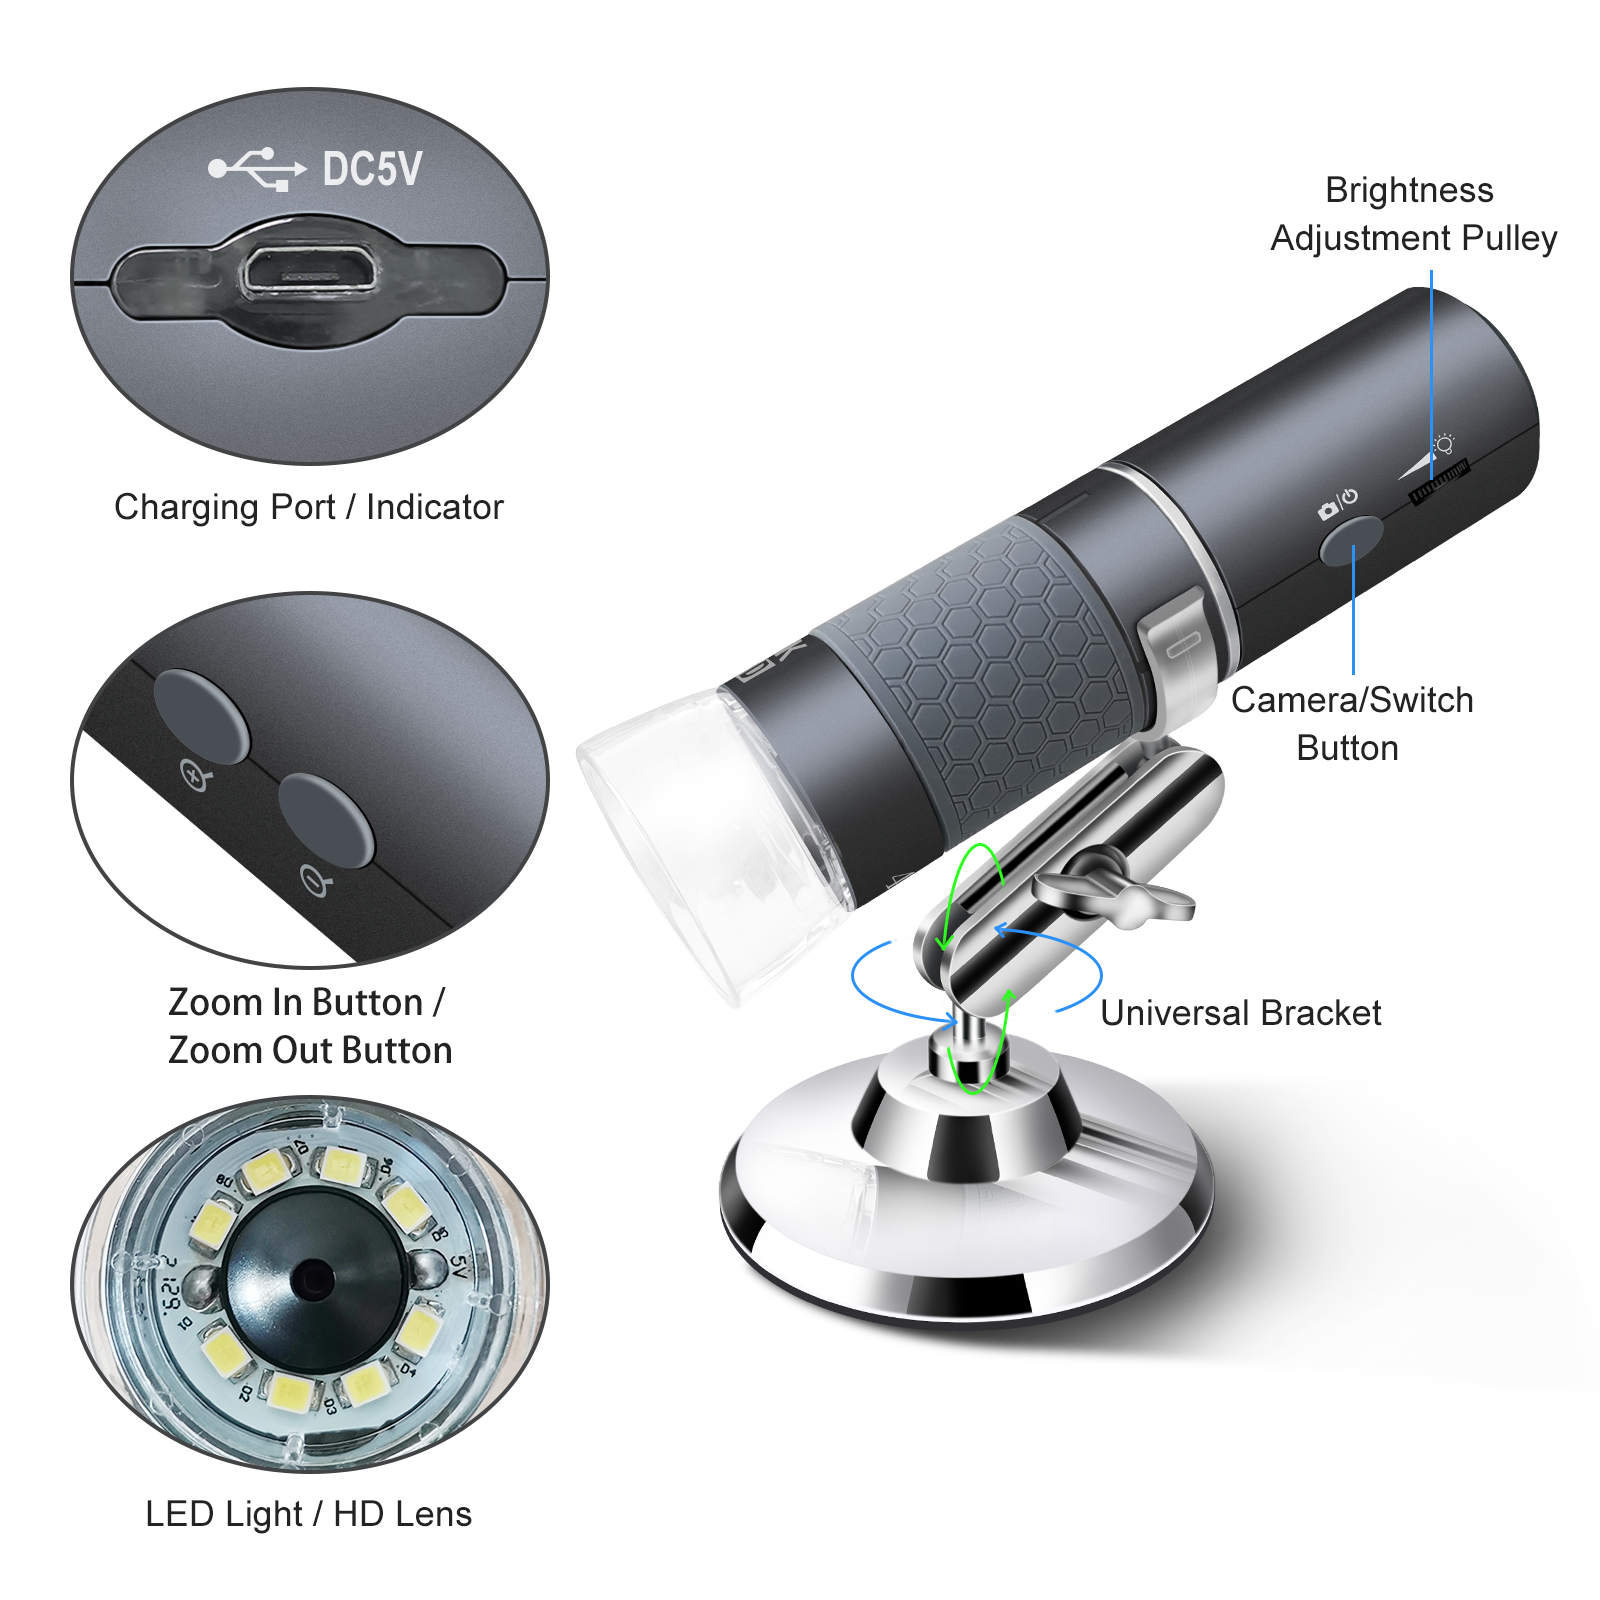 Ninyoon 4K WiFi Microscope for iPhone Android, 50 to 1000X USB Digital ...